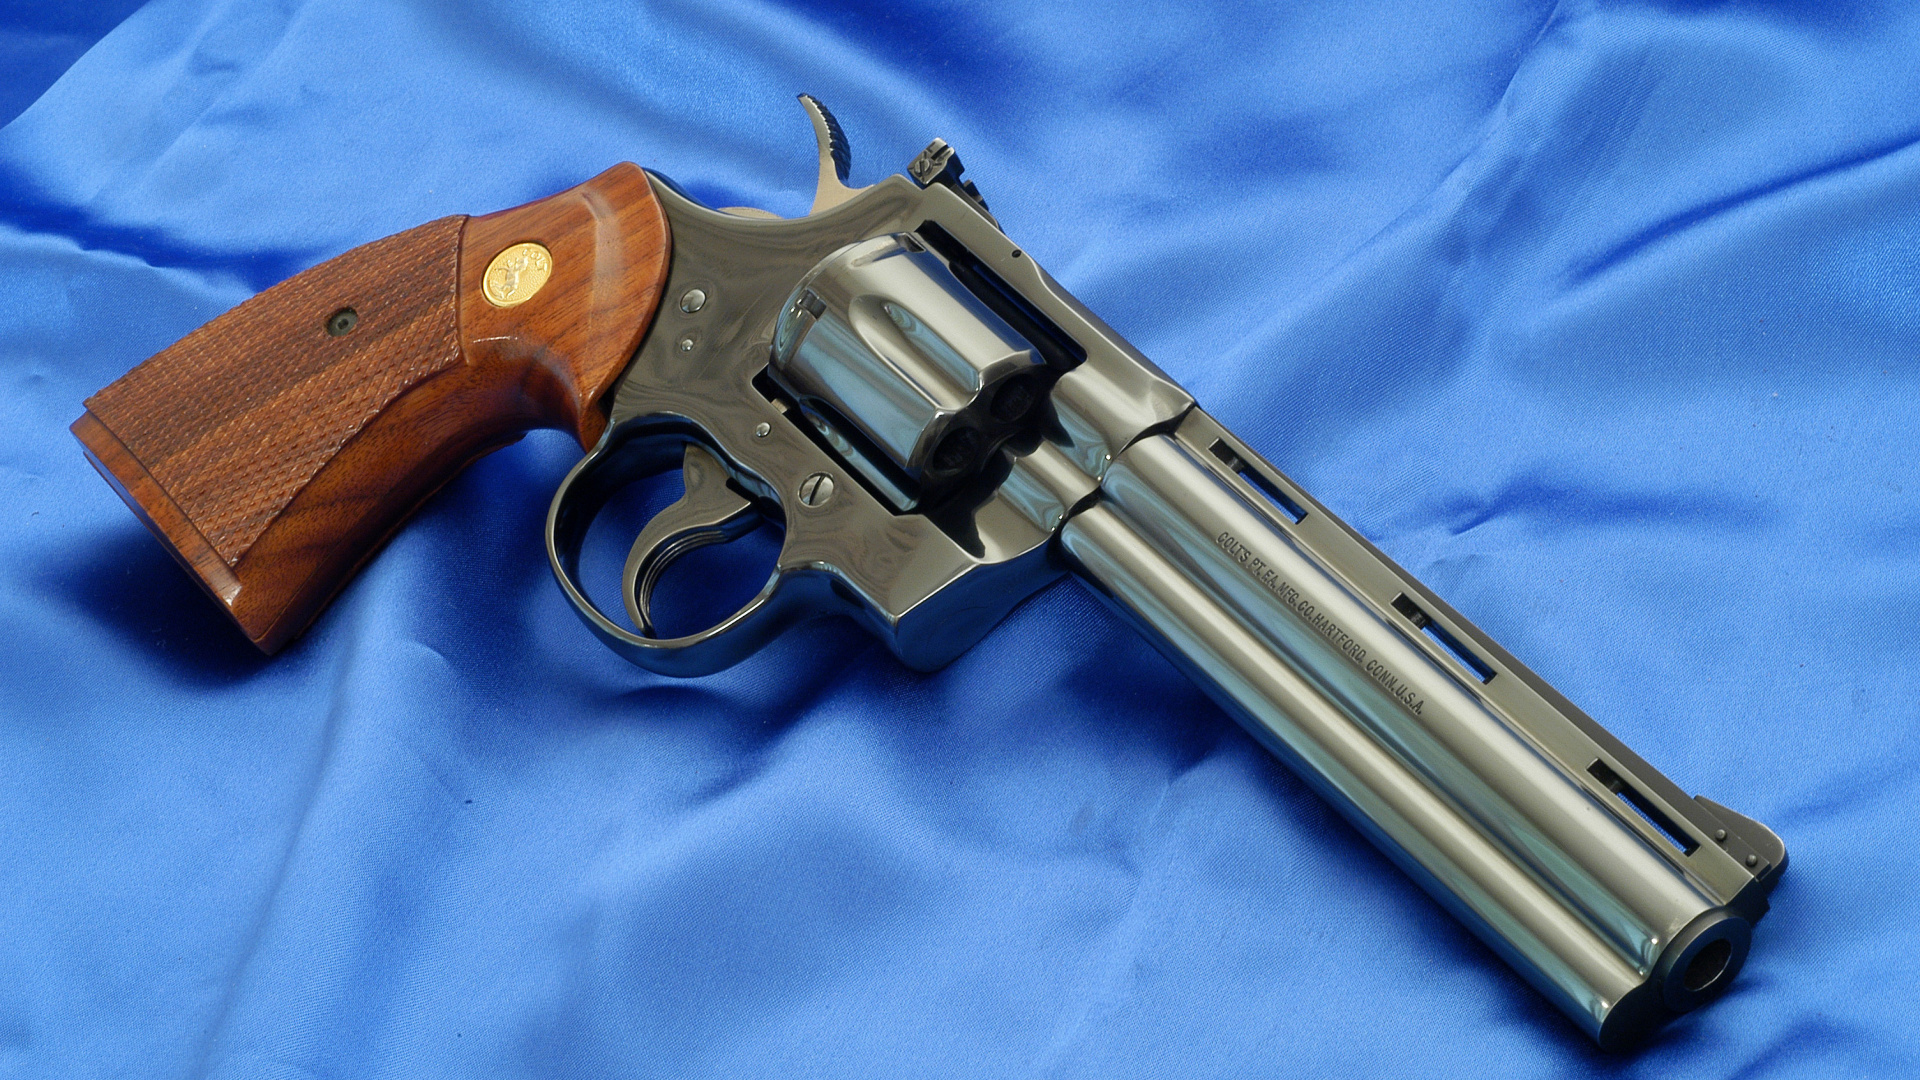 Handfeuerwaffe, M1911 Pistole, Feuerwaffe, Revolver, Trigger. Wallpaper in 1920x1080 Resolution